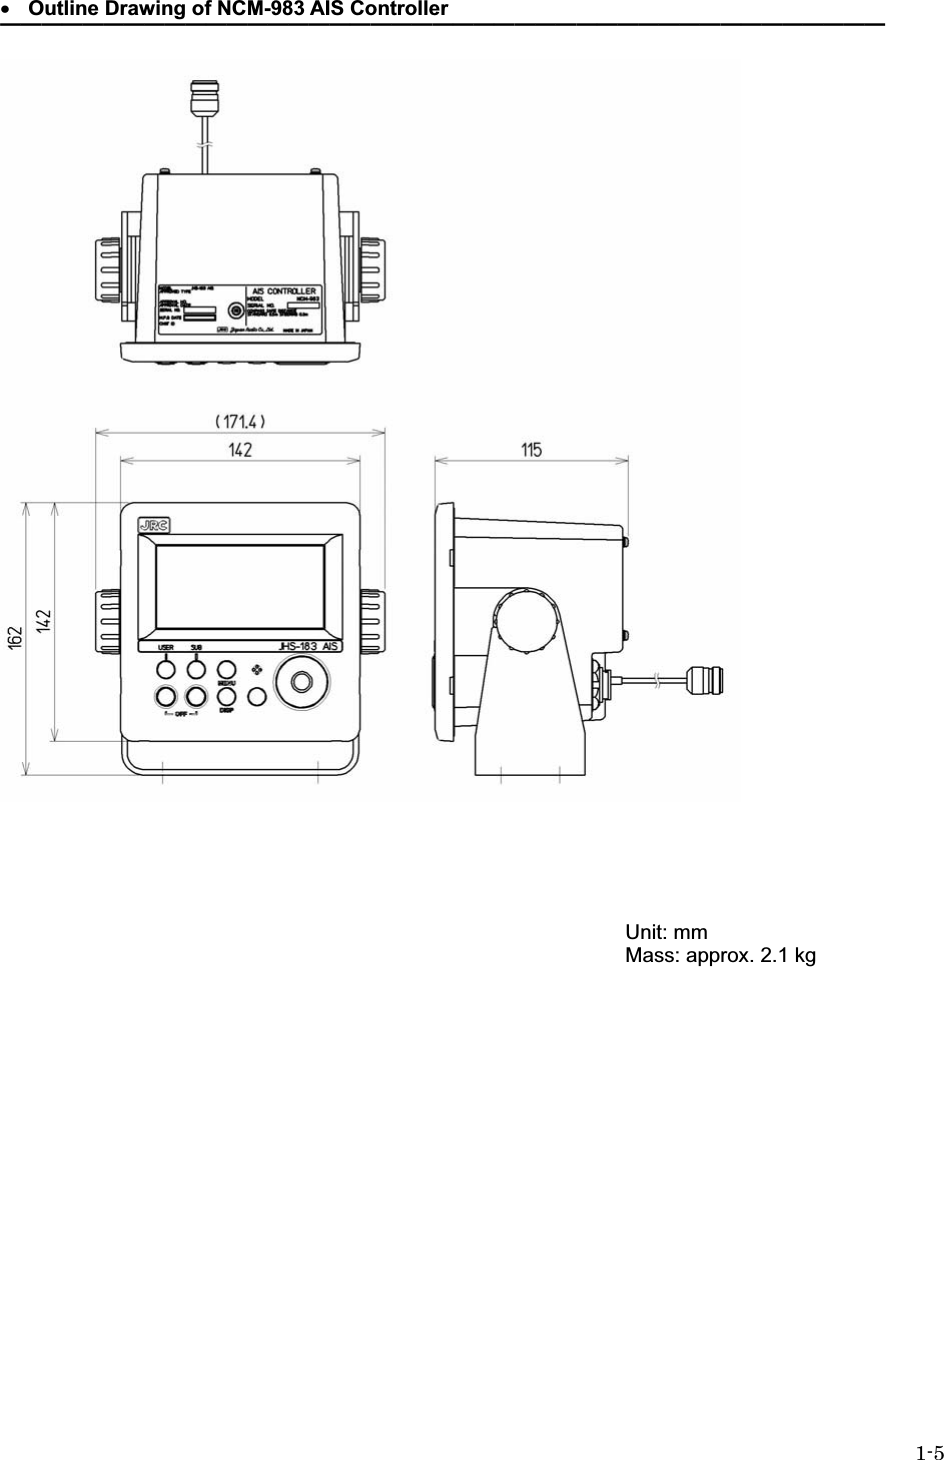 1-5  x Outline Drawing of NCM-983 AIS Controller ֤֤֤֤֤֤֤֤֤֤֤֤֤֤֤֤֤֤֤֤֤֤֤֤֤֤֤֤֤֤֤֤֤֤֤֤֤֤֤֤֤֤֤        Unit: mm Mass: approx. 2.1 kg  